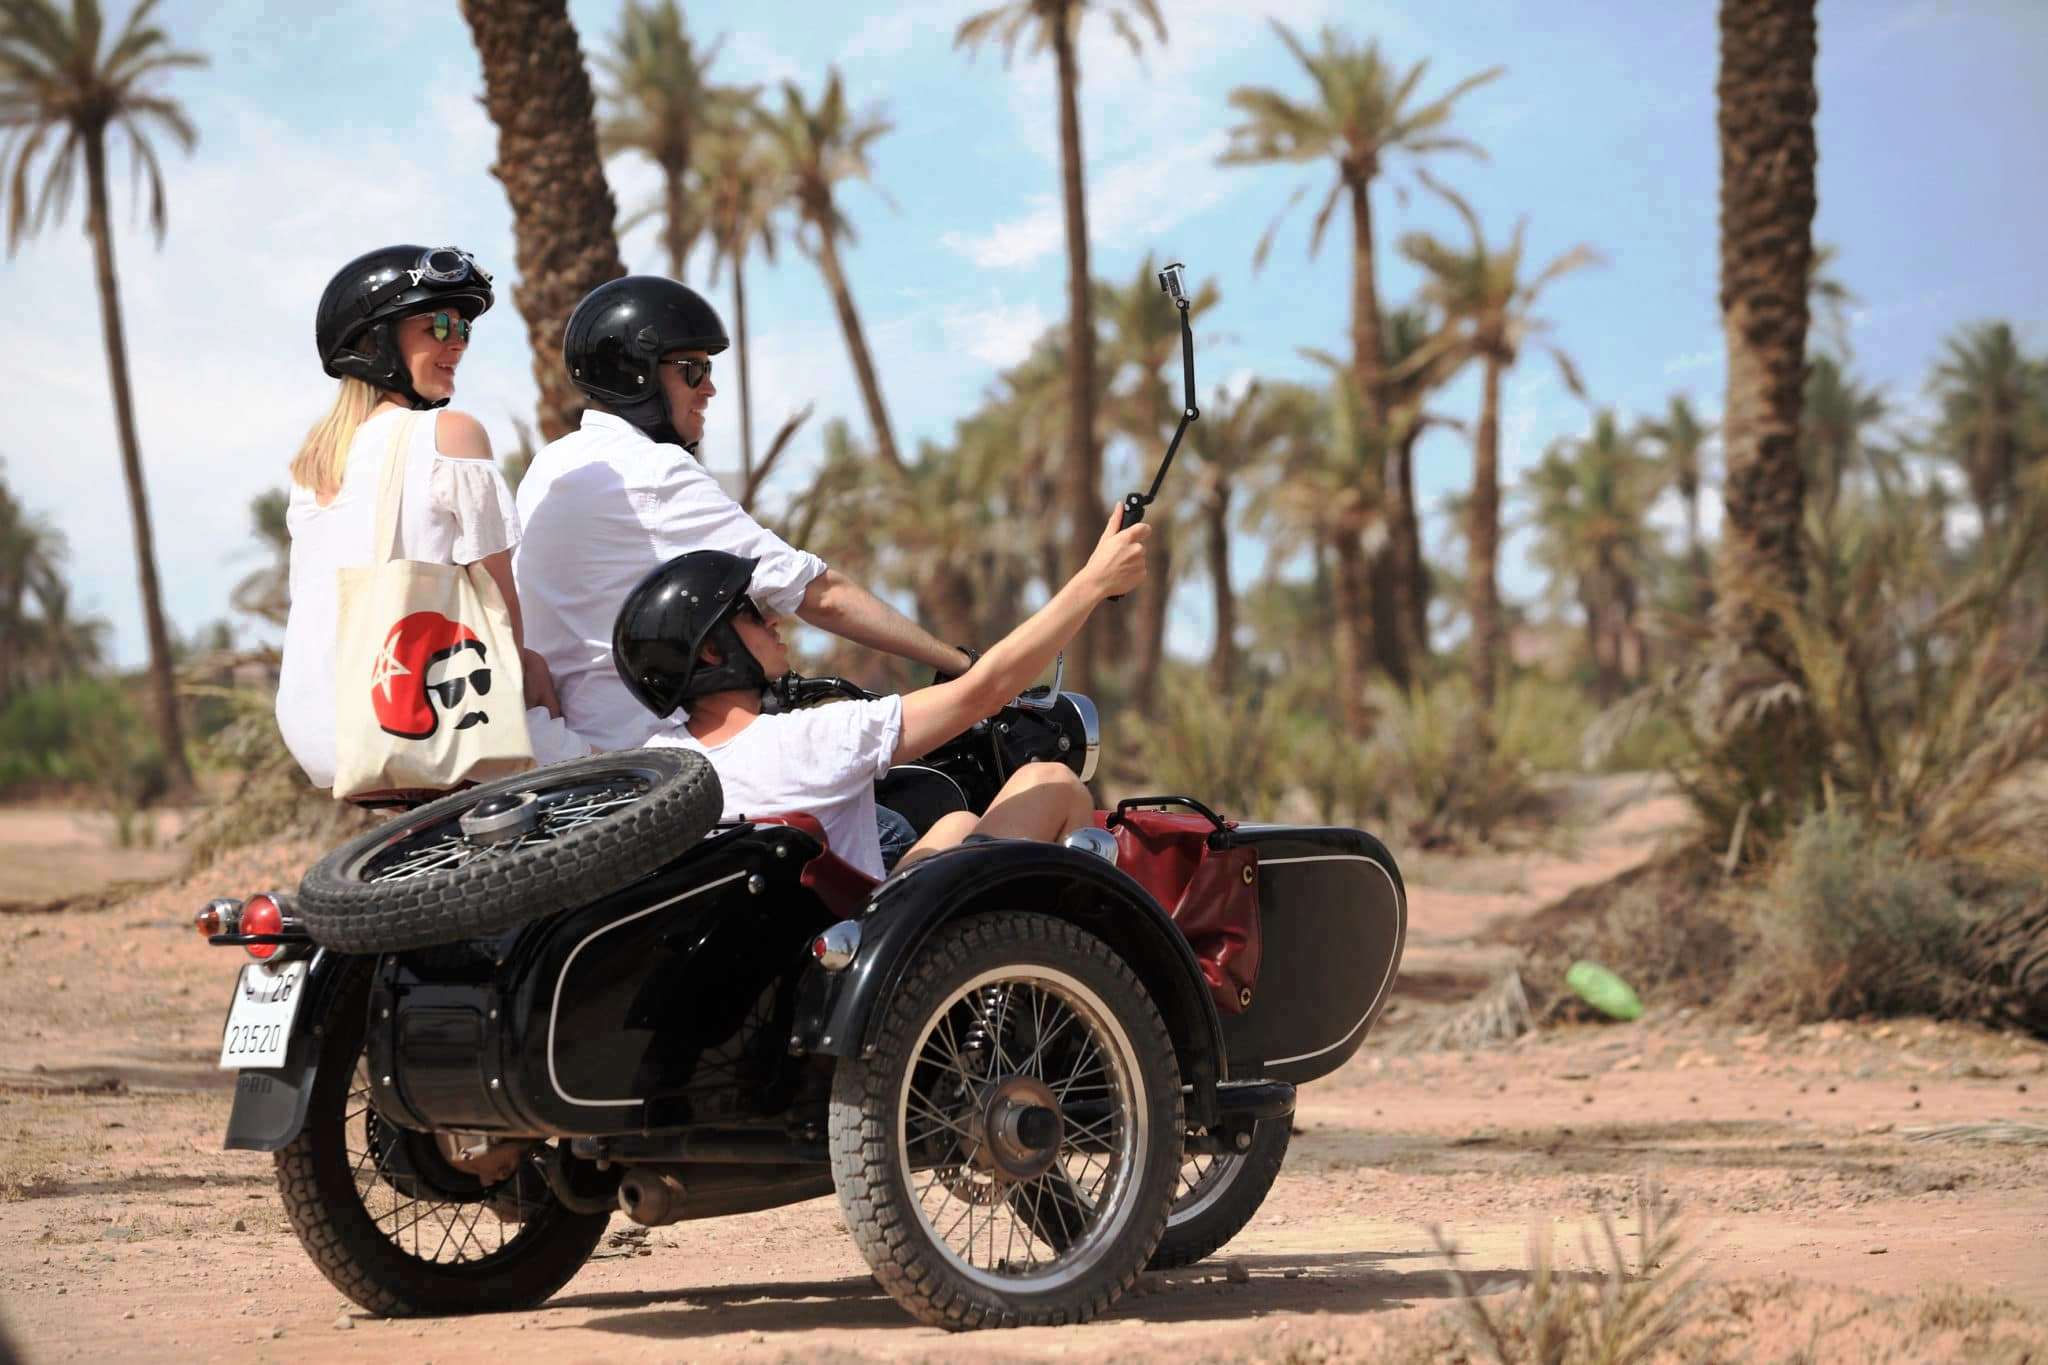 Morocco sidecar ride tour to explore the desert of Marrakech Agafay